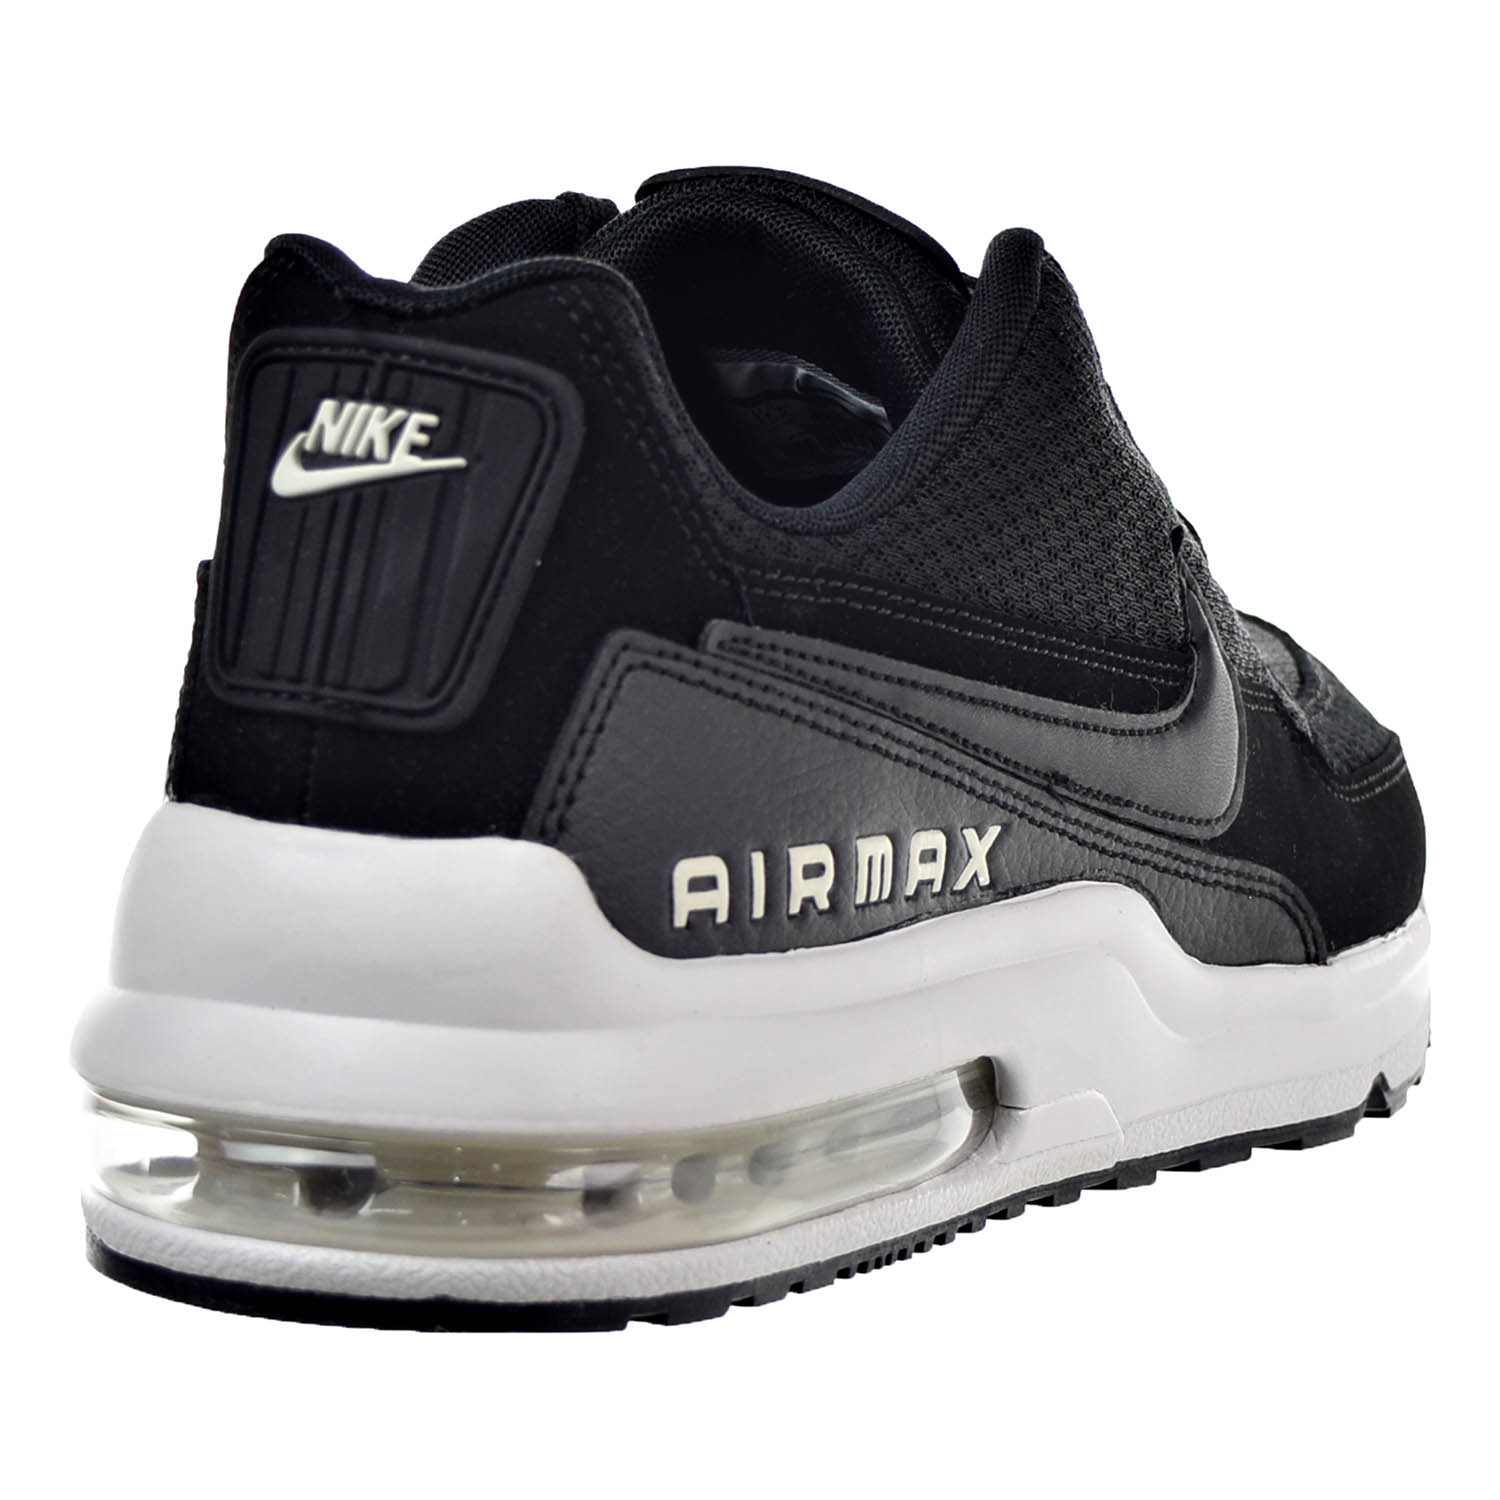 Nike Air Max LTD 3 Prem Men's Shoes Black-Black-Pale Grey 695484-005 | eBay